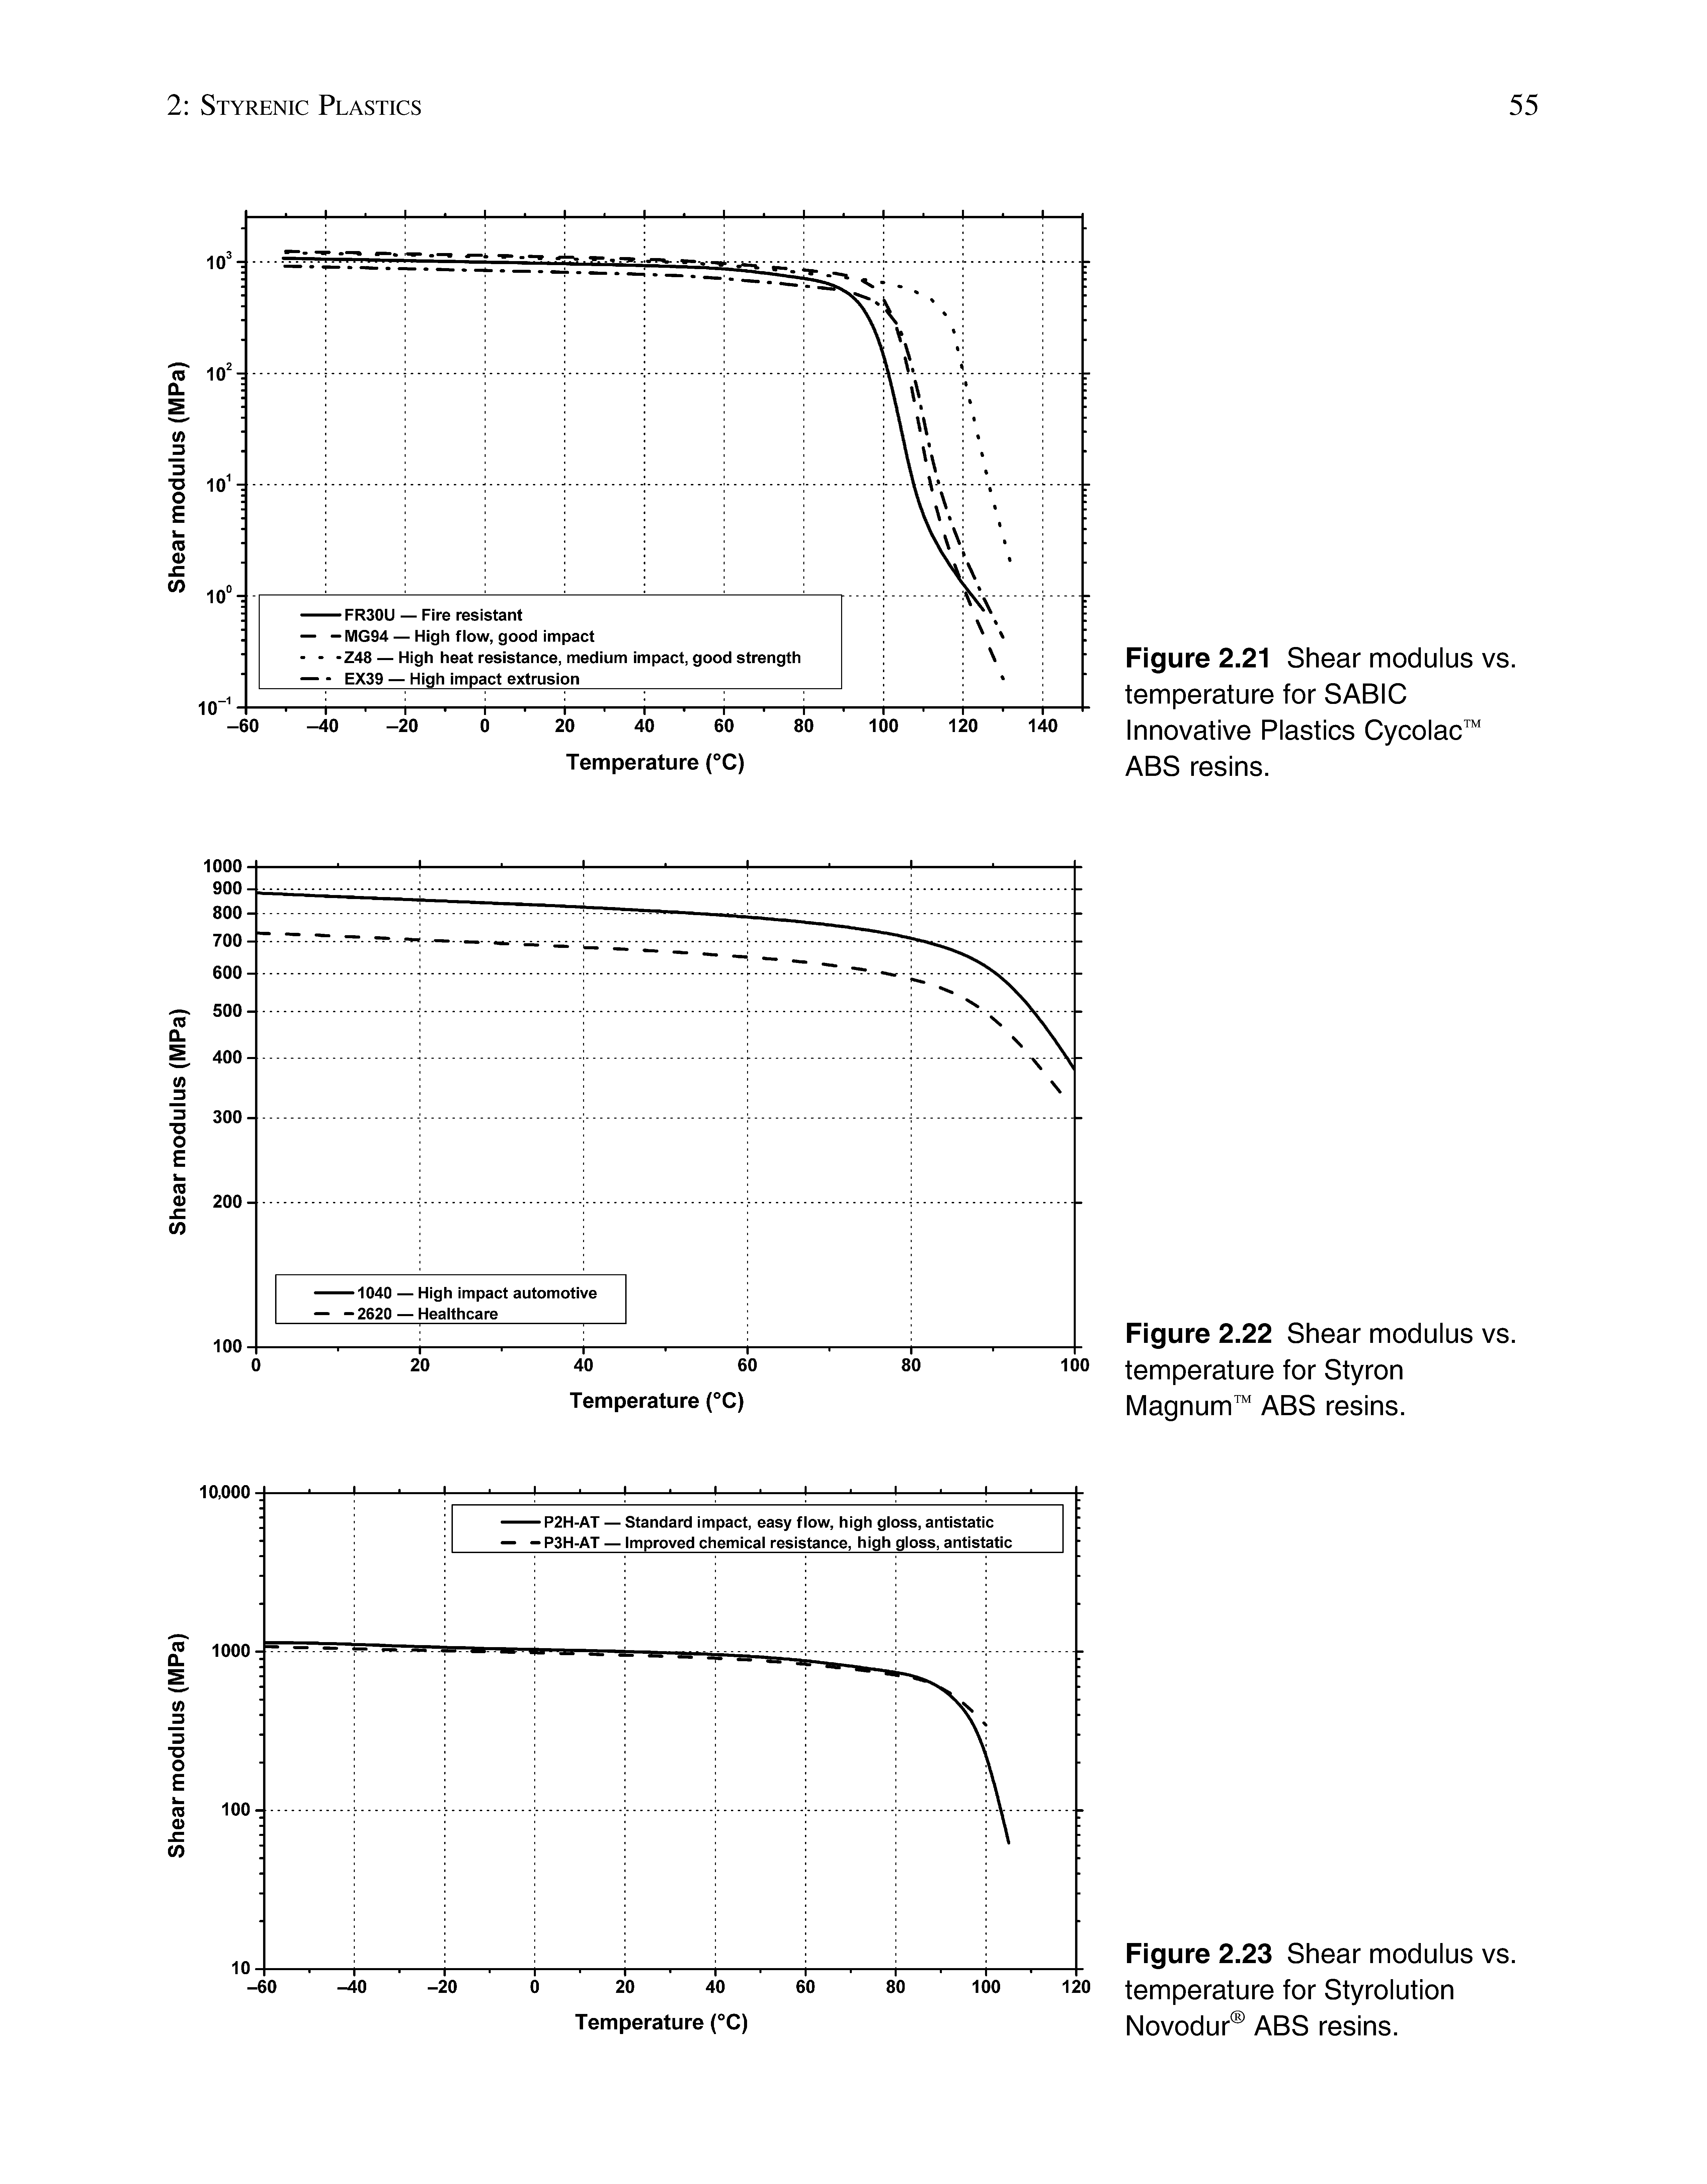 Figure 2.22 Shear modulus vs. temperature for Styron Magnum ABS resins.